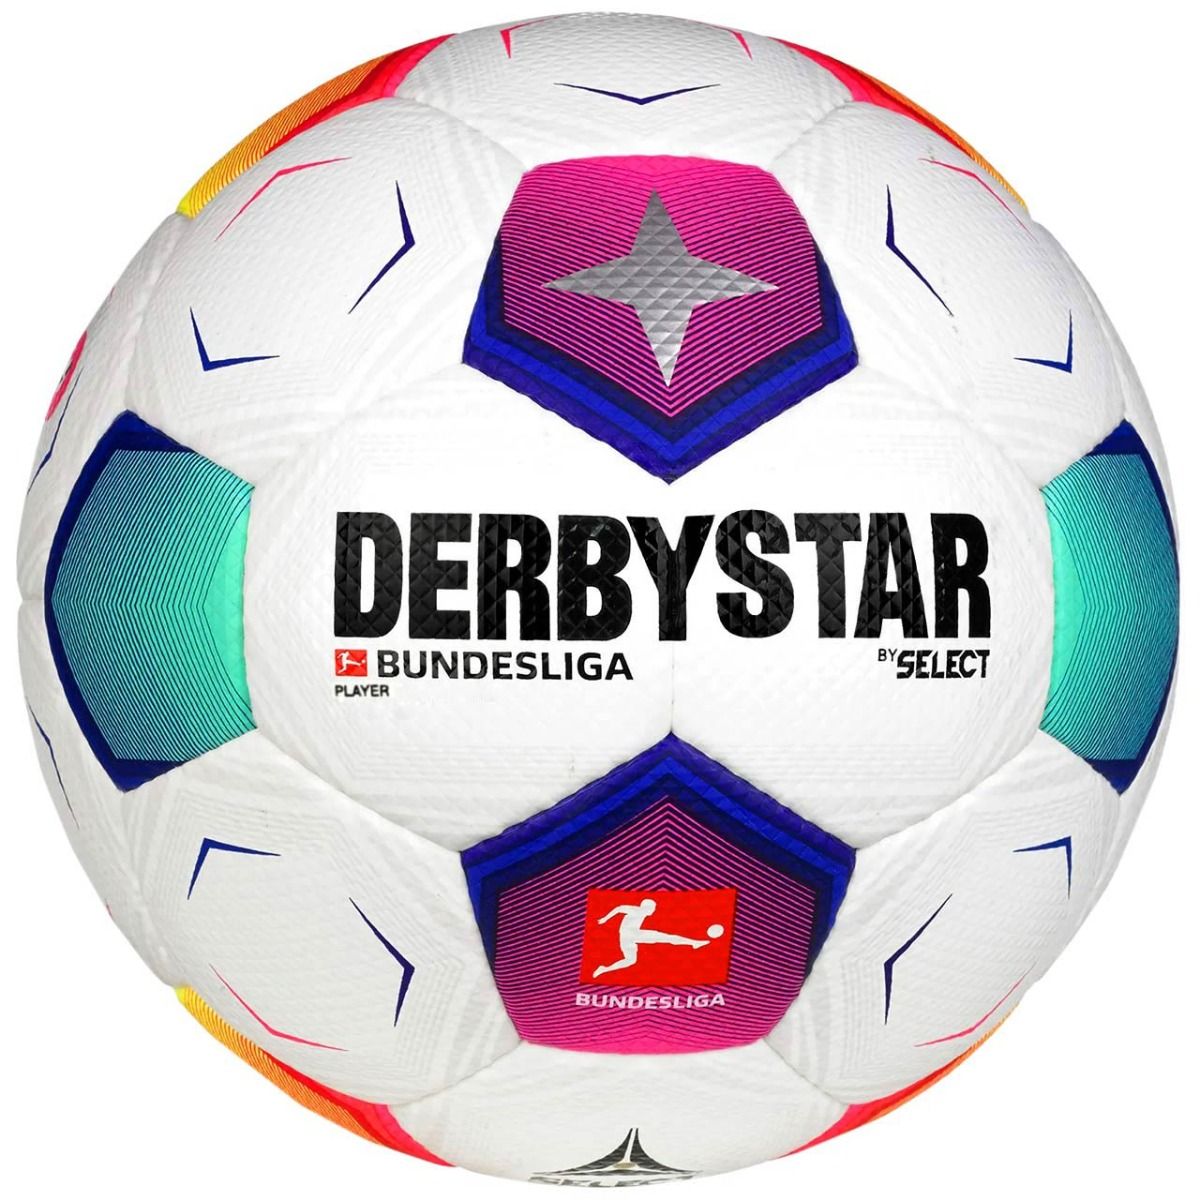 Select Fotbalový míč Derbystar Bundesliga Player v23 18178